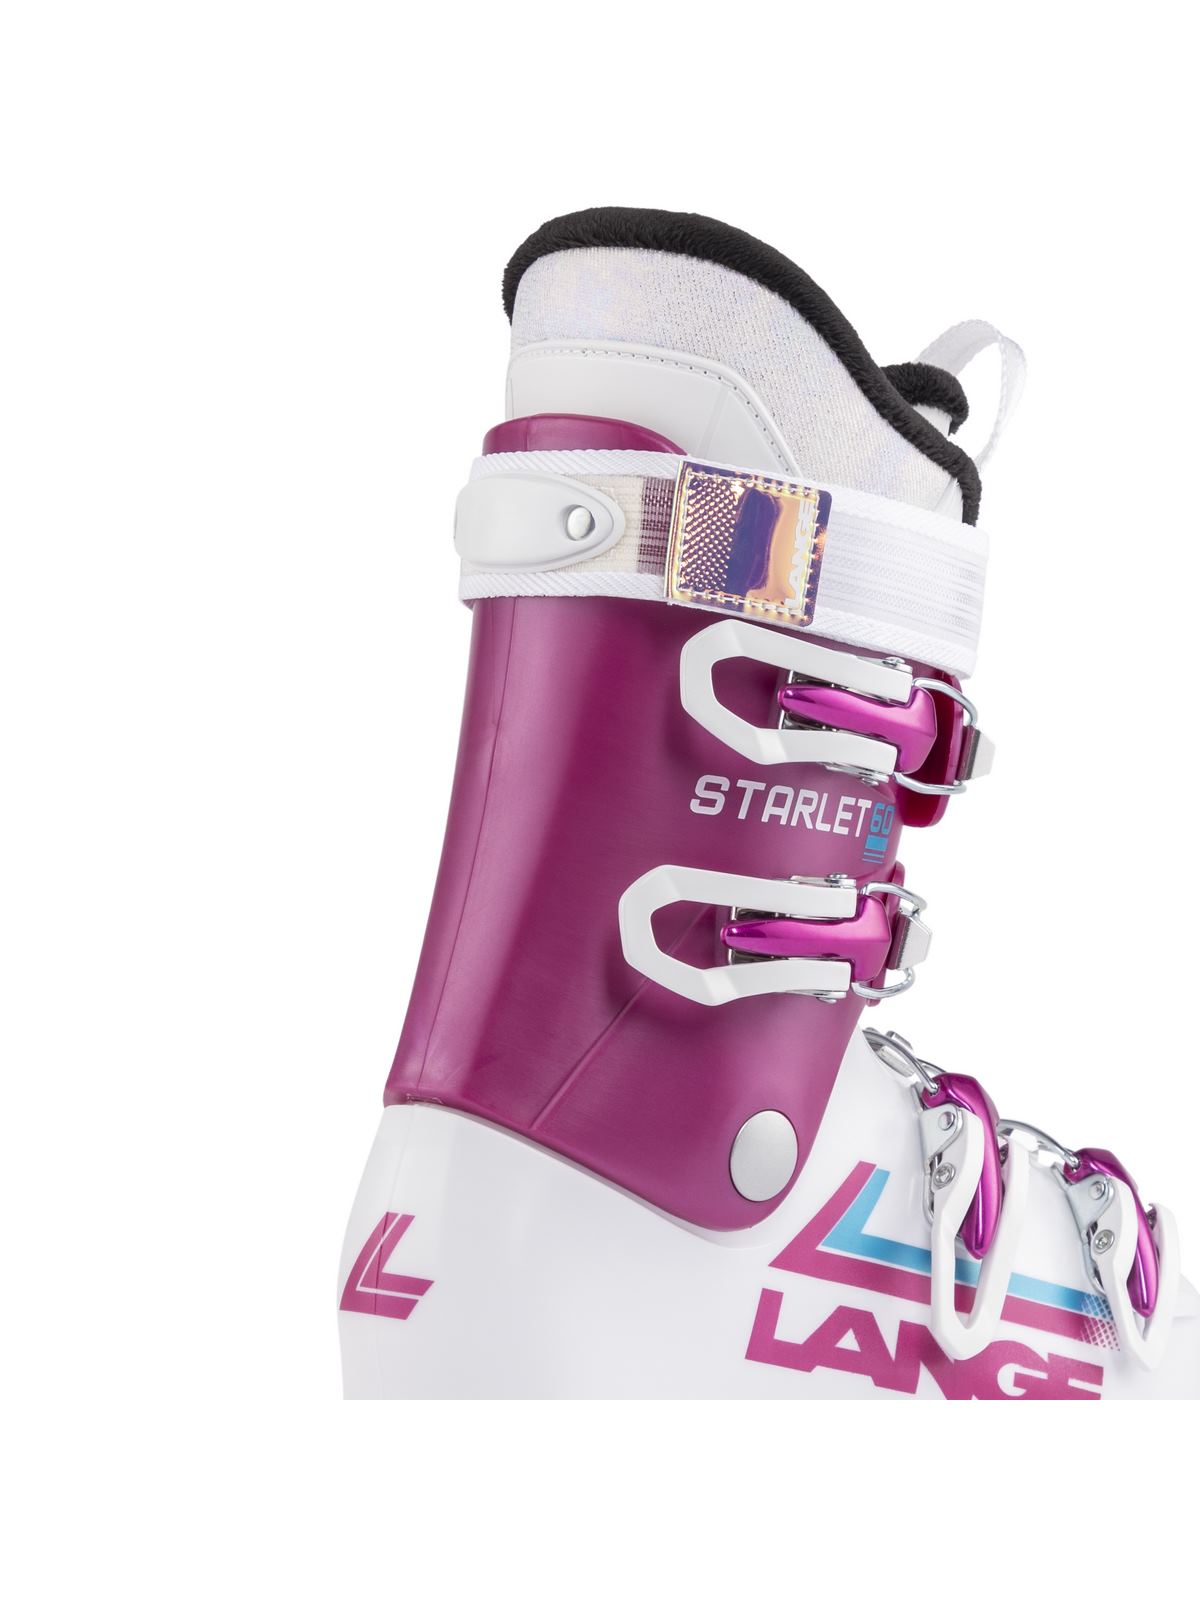 Buty narciarskie LANGE Starlet 50 - White/Star Pink